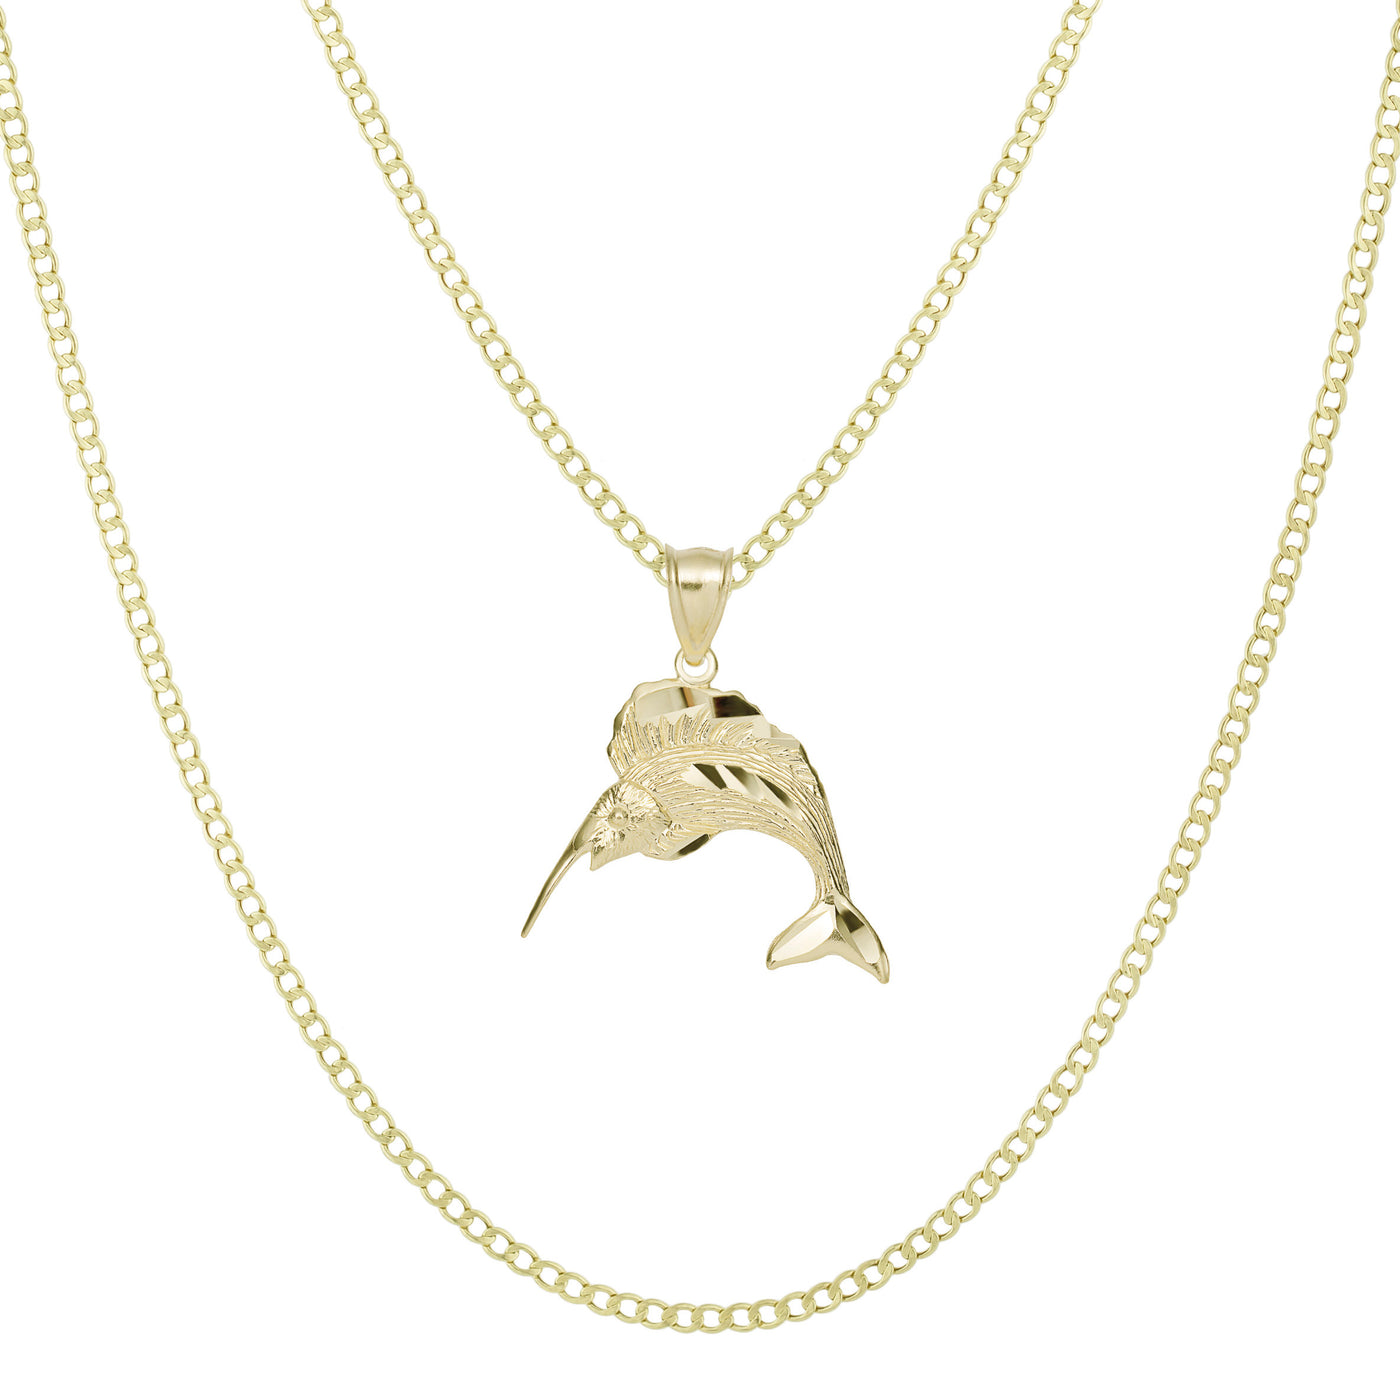 1 1/4" Diamond Cut Swordfish Pendant & Chain Necklace Set 10K Yellow Gold